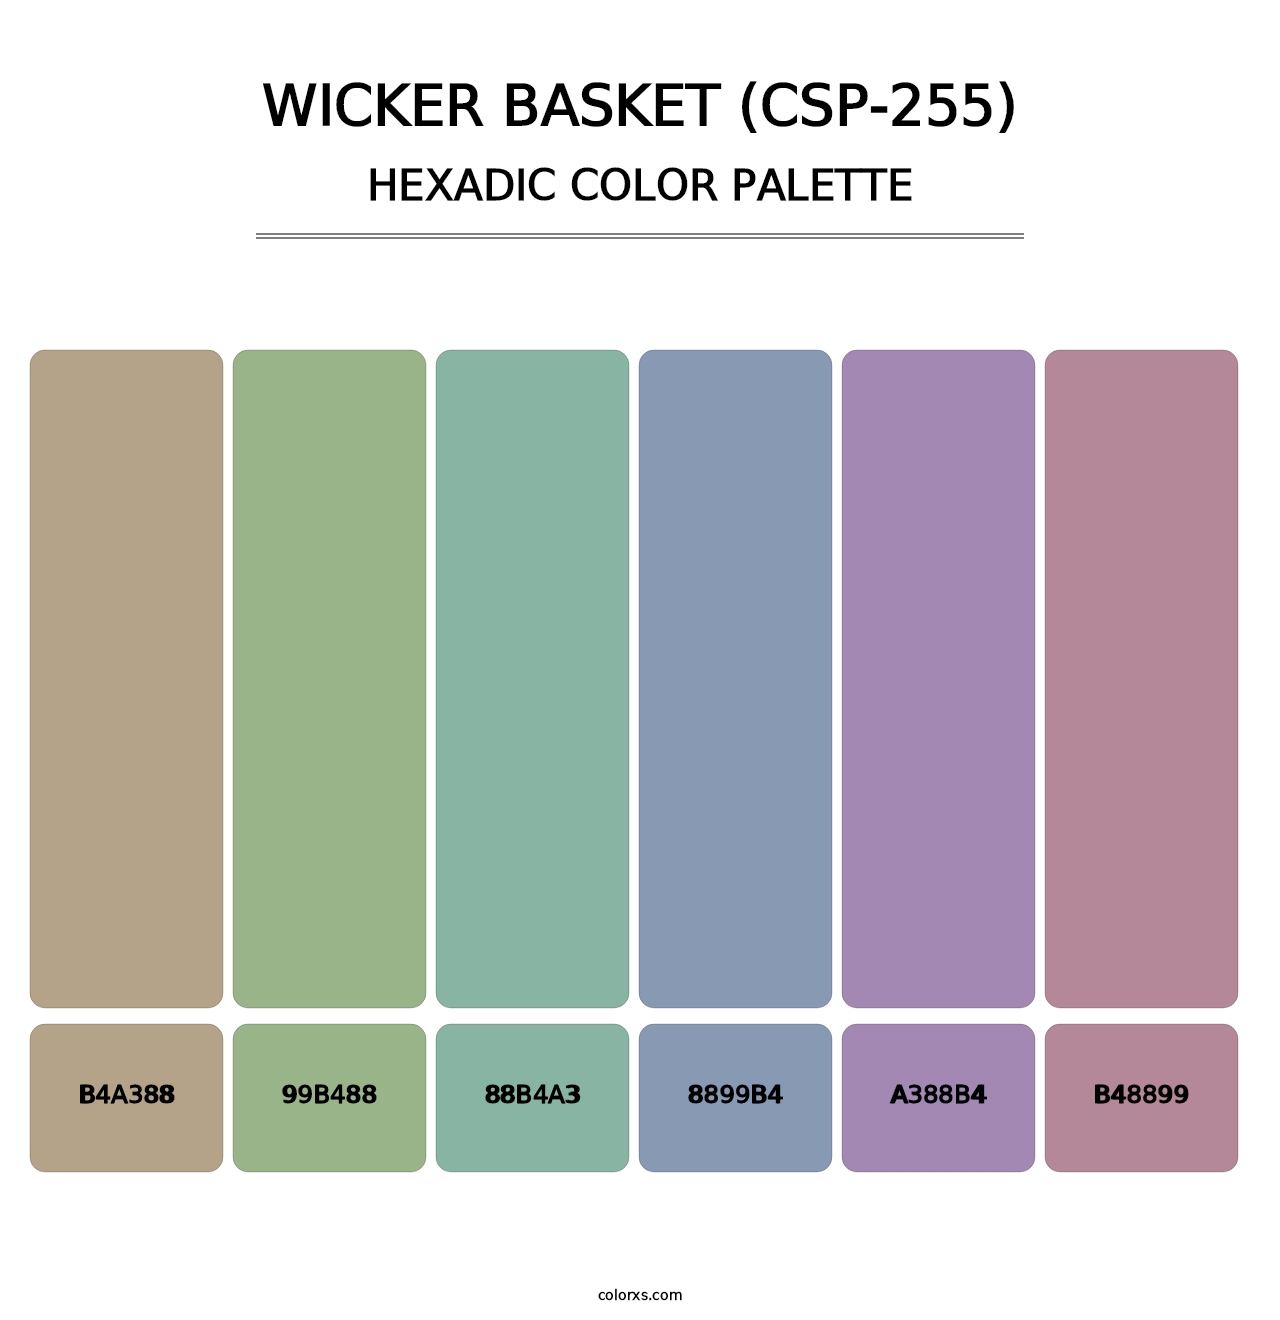 Wicker Basket (CSP-255) - Hexadic Color Palette